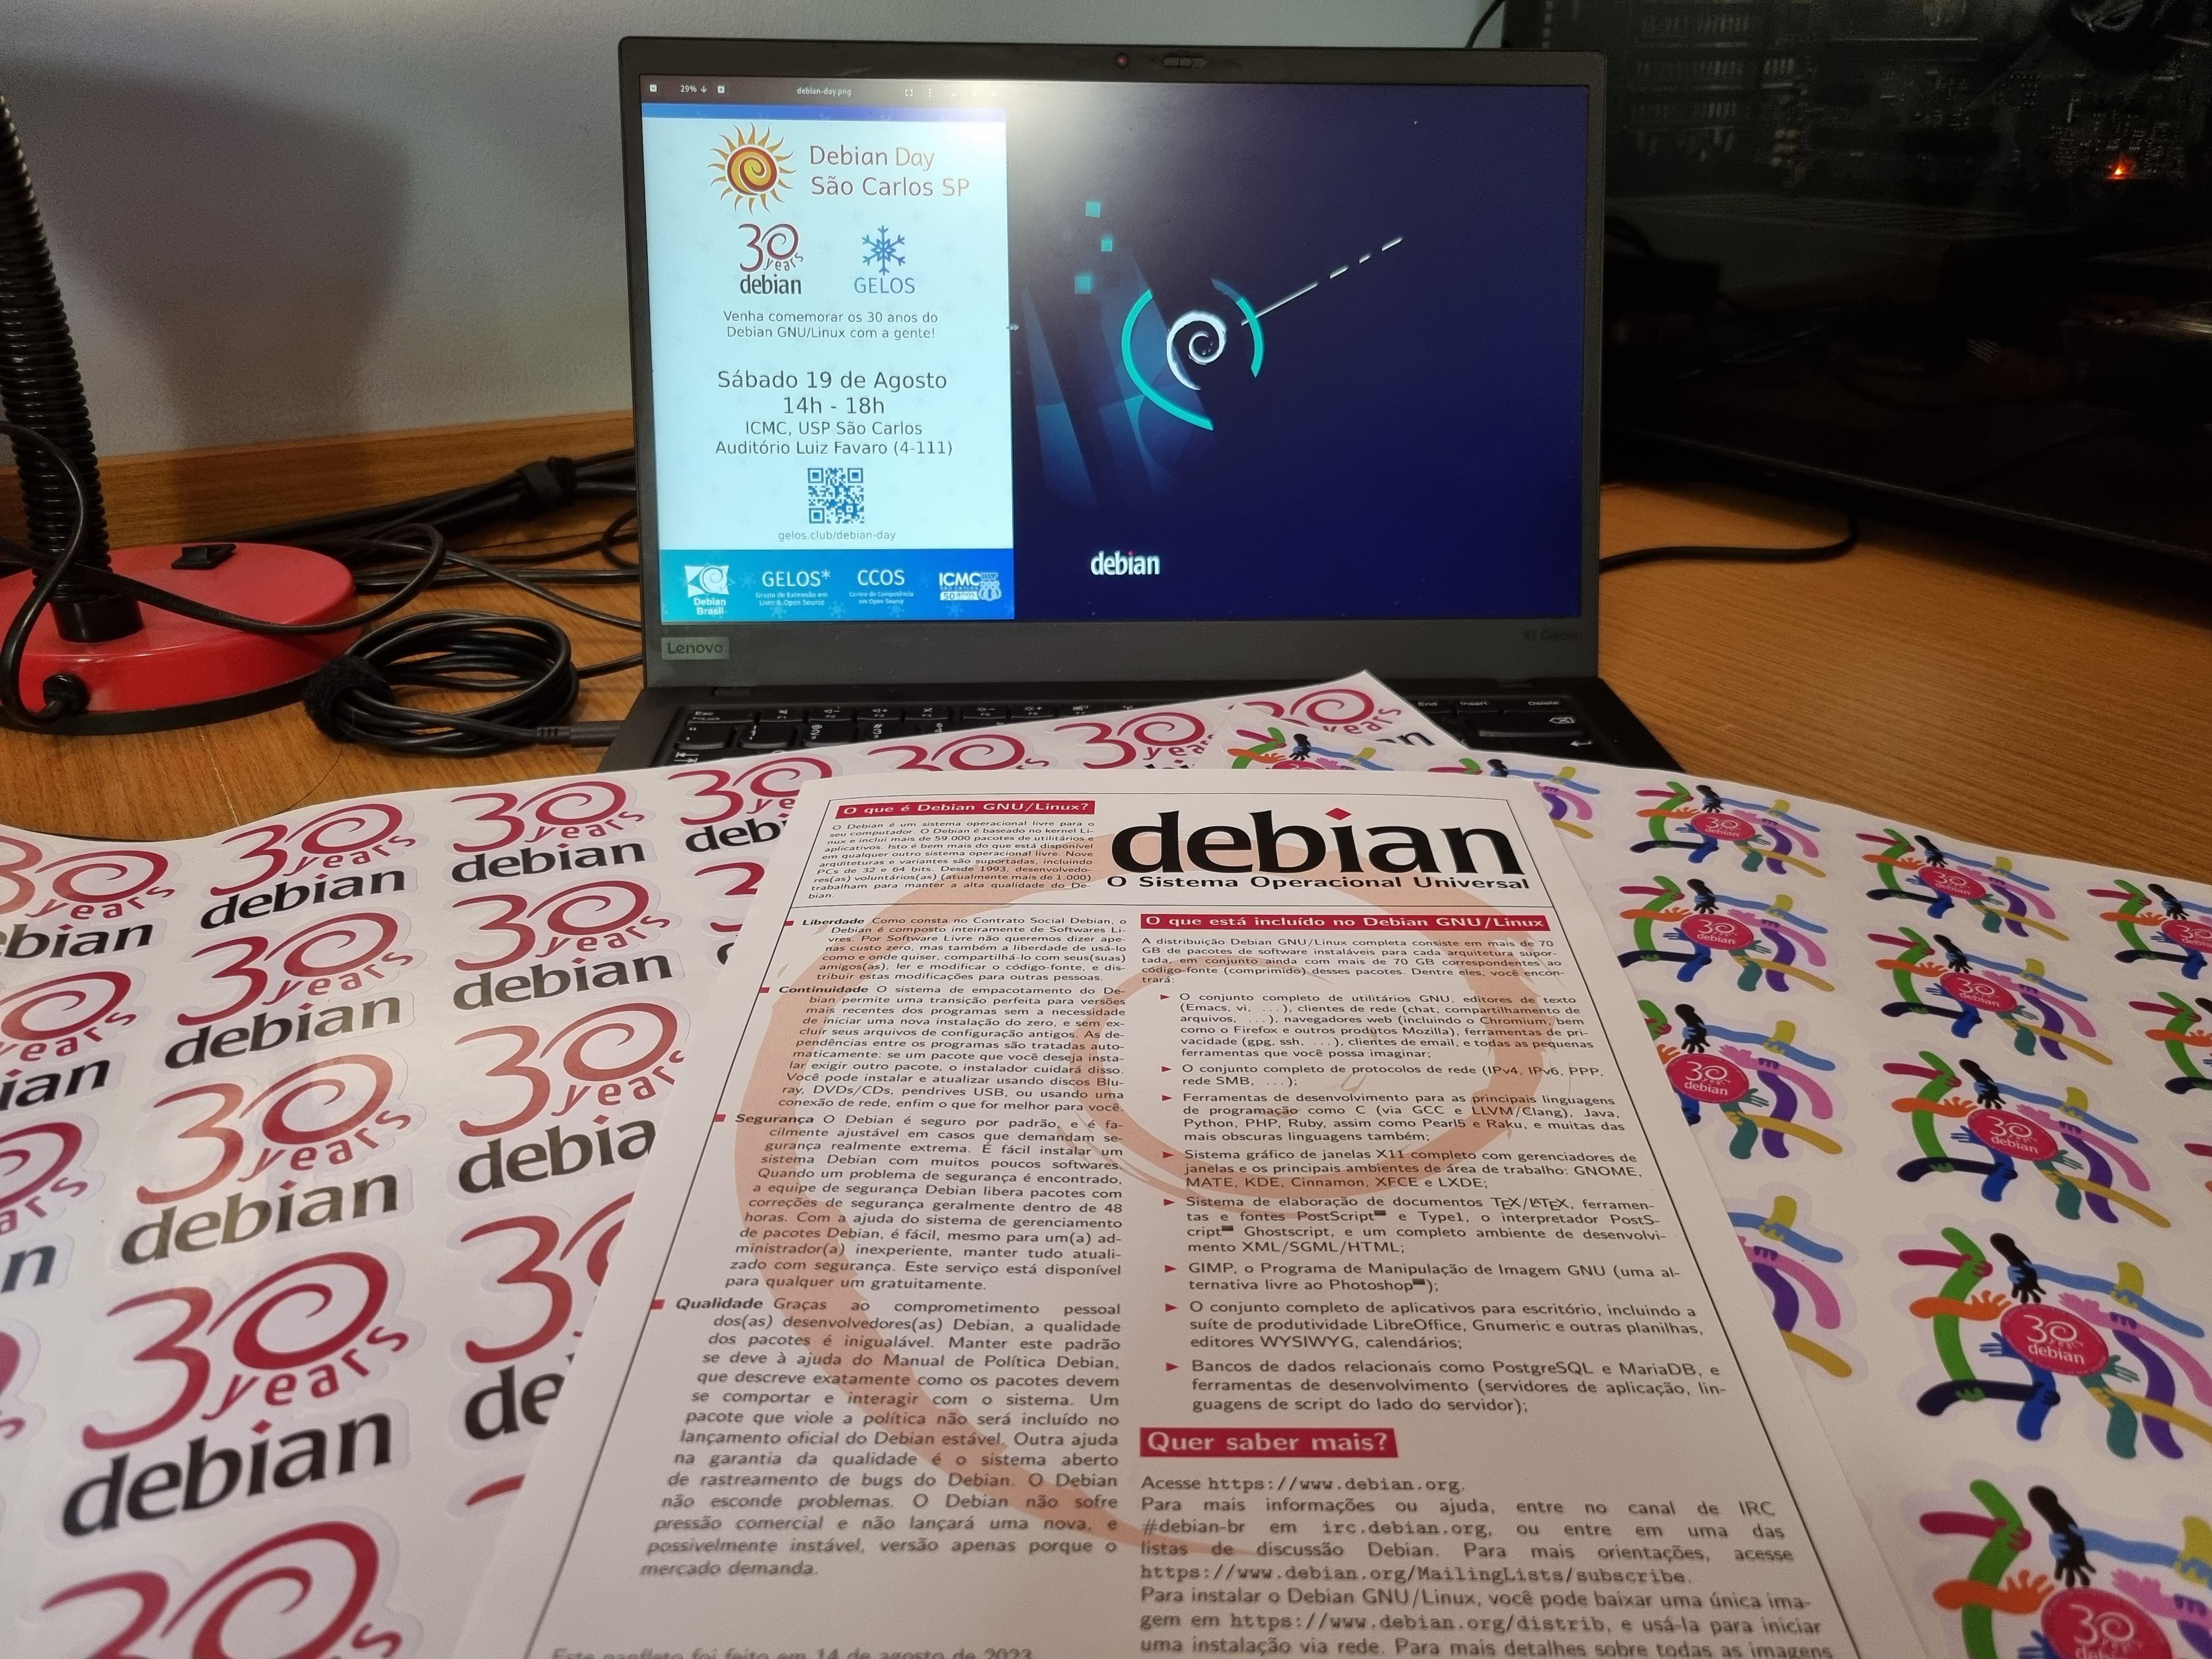 Preparation for Debian Day